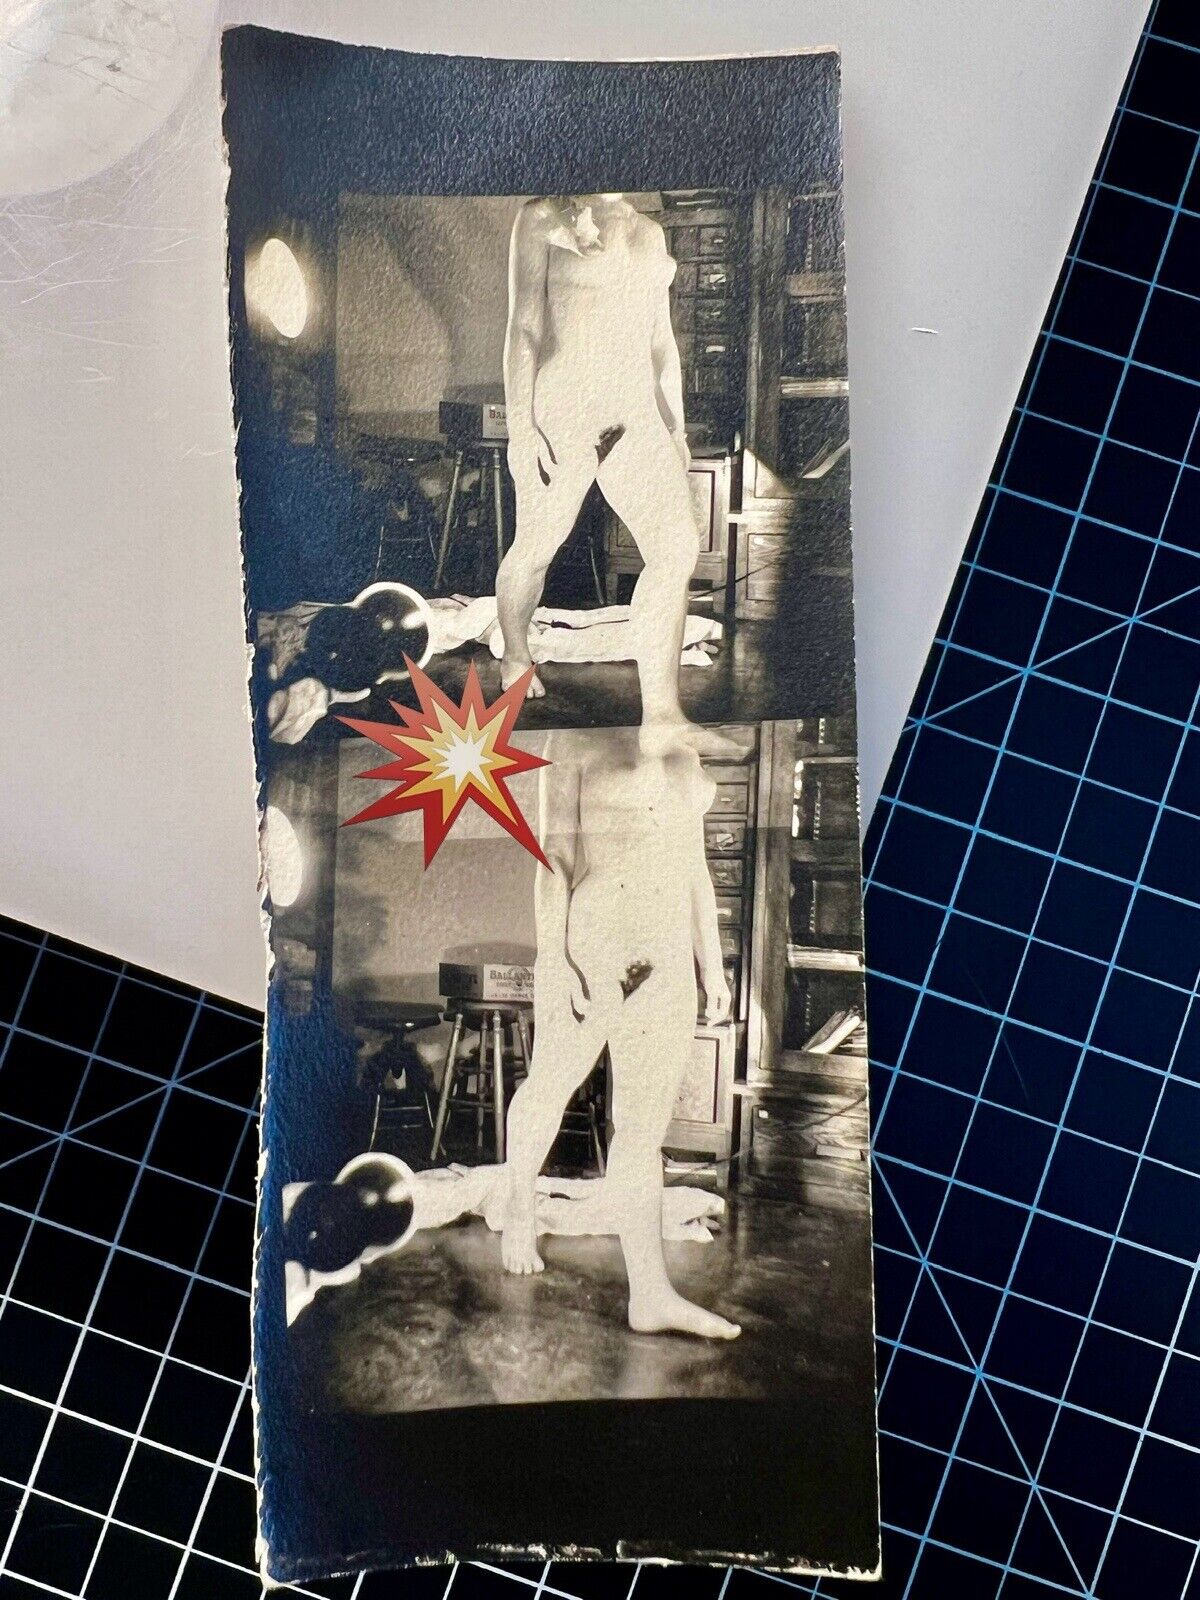 Vtg 1920’s Girl Flapper Bosom PIN UP Risque Nude Original B&W Girlie Photo #45